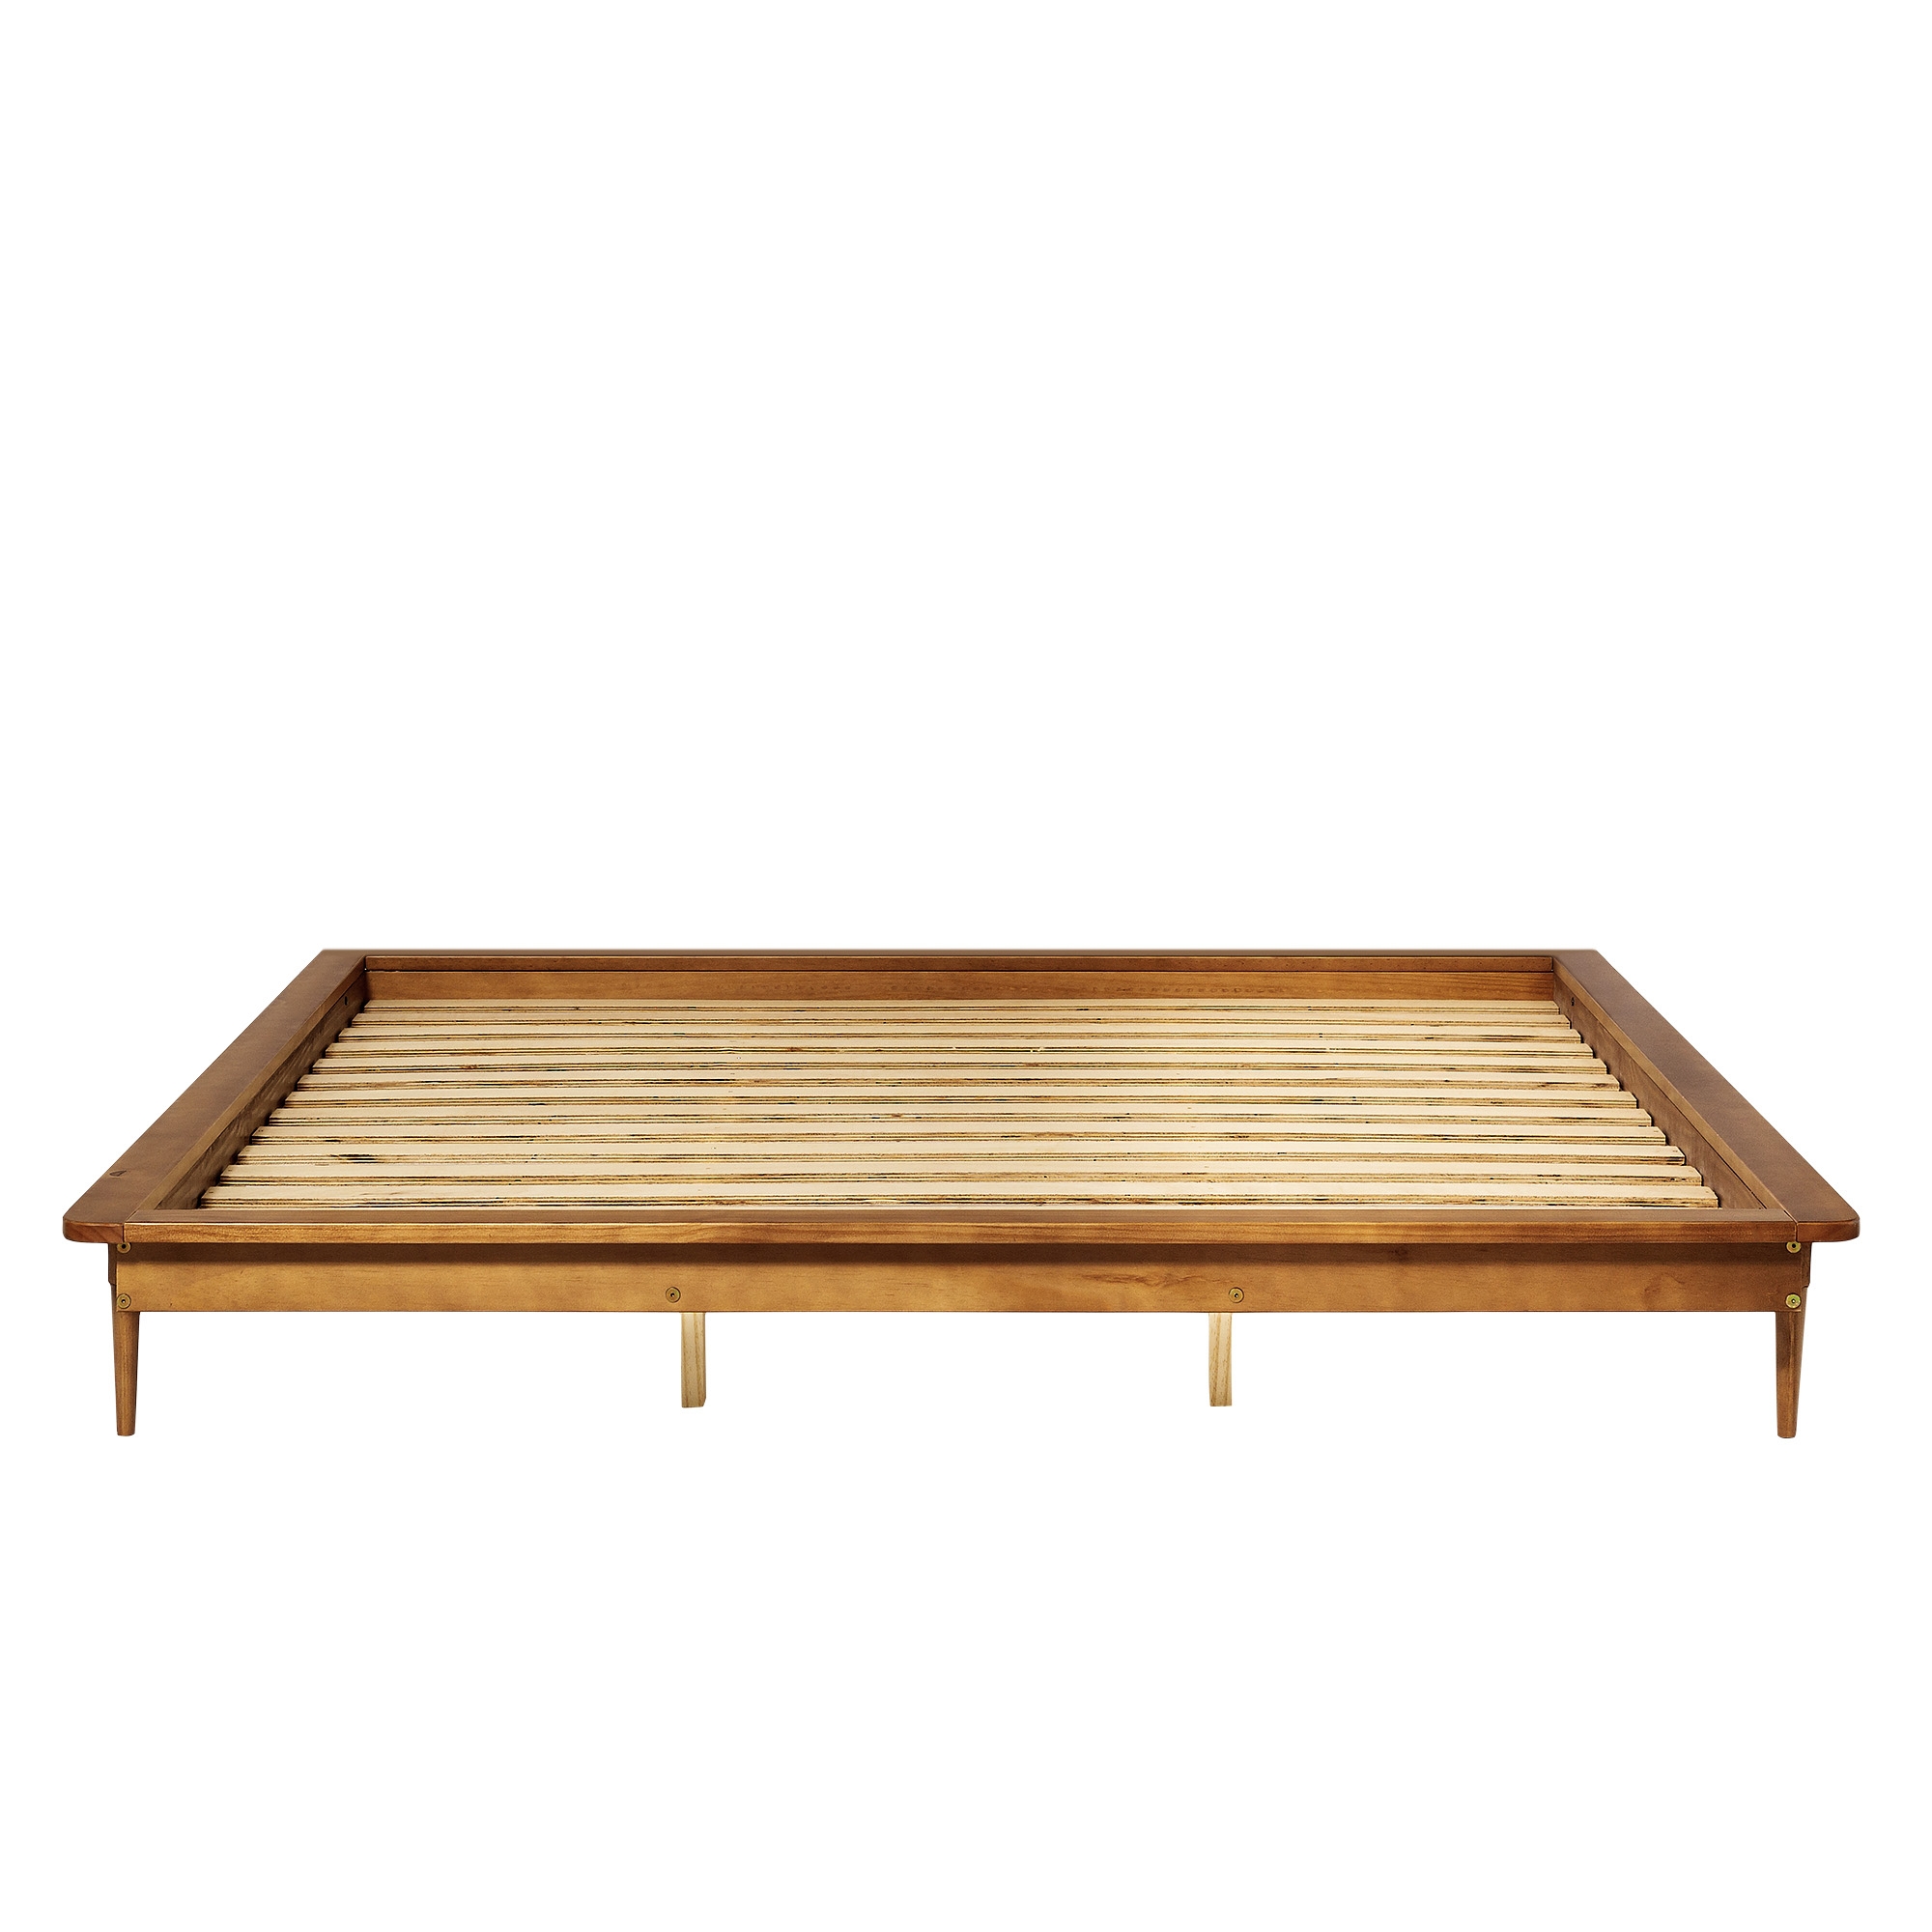 King Mid Century Modern Solid Wood Platform Bed - Caramel - Image 3